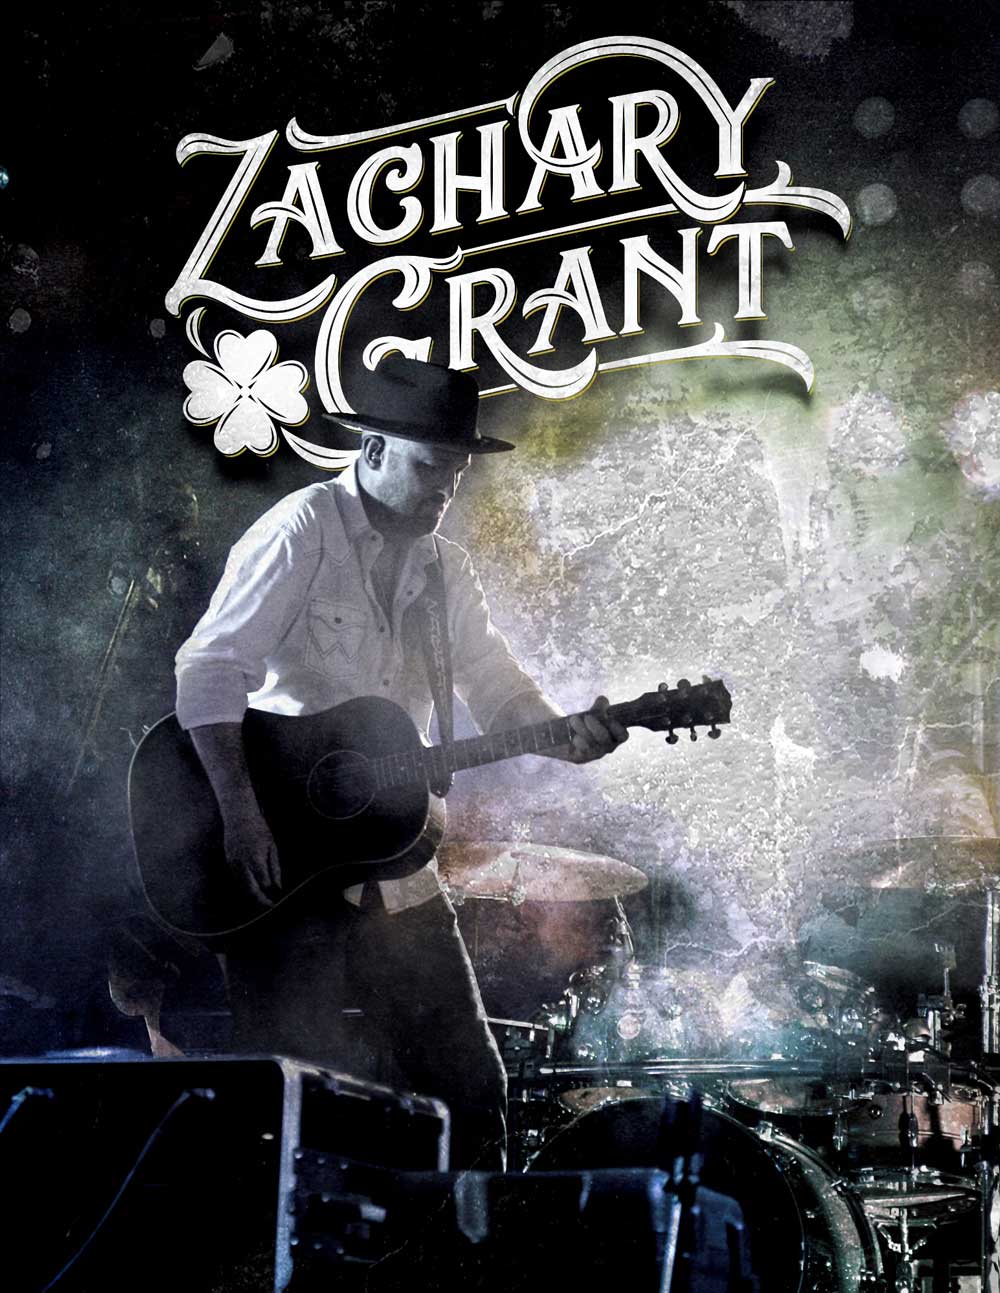 zachary grant poster